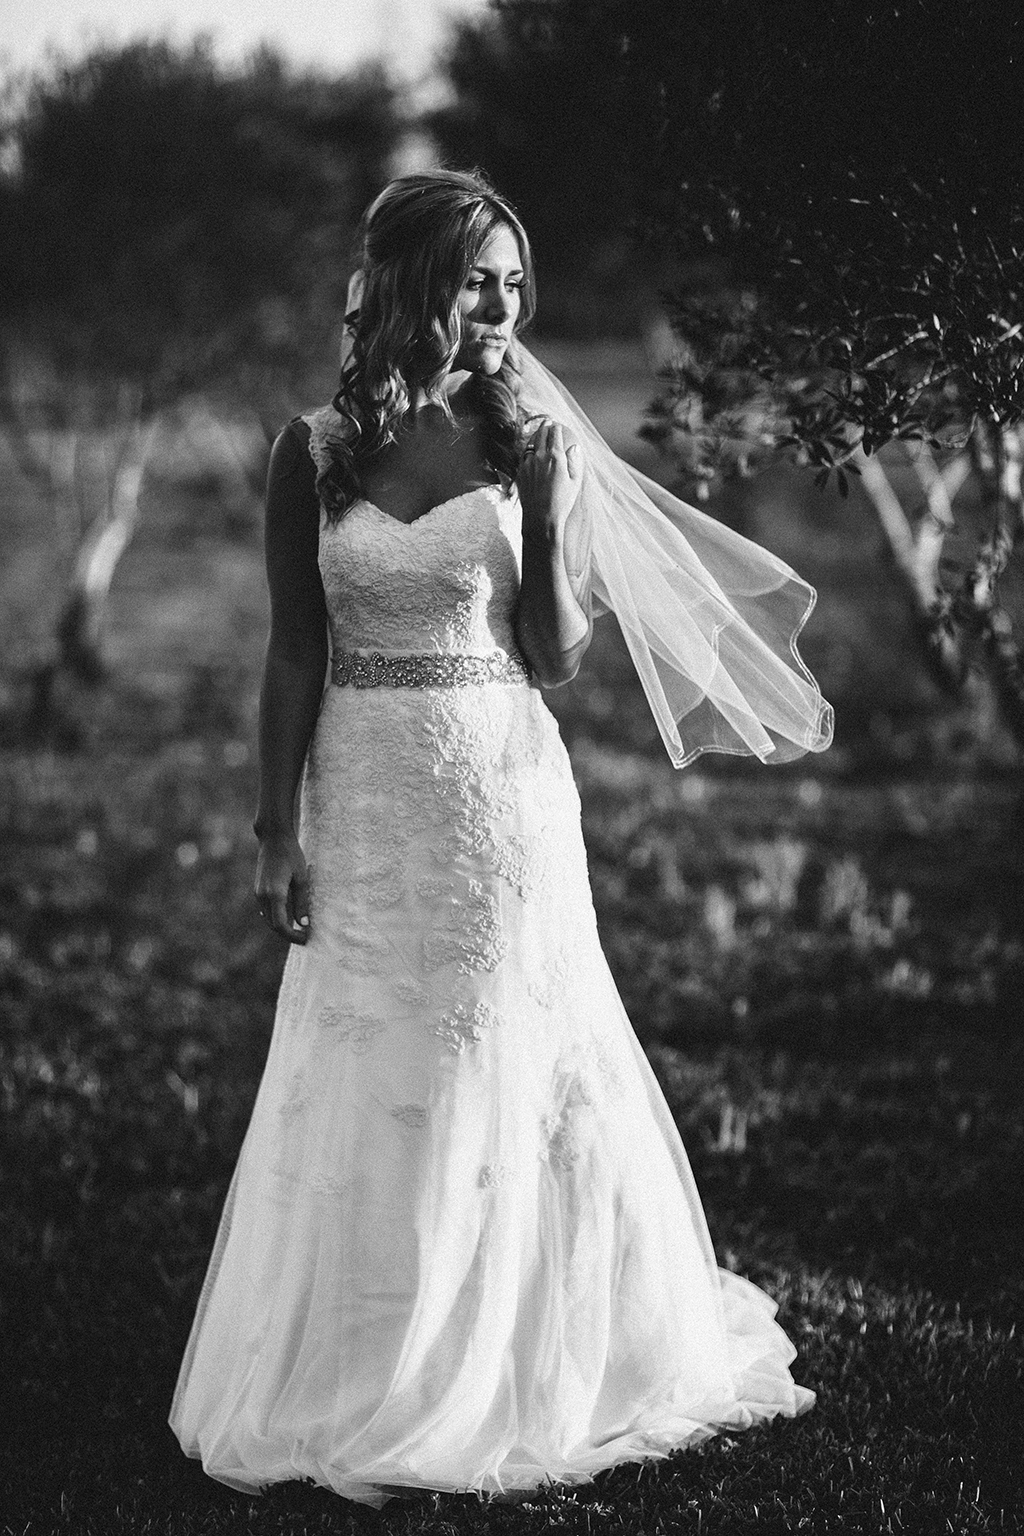 Vineyard-Bridal-Styled-Shoot-1415_Kristen-Curette-Photography-Edit-2